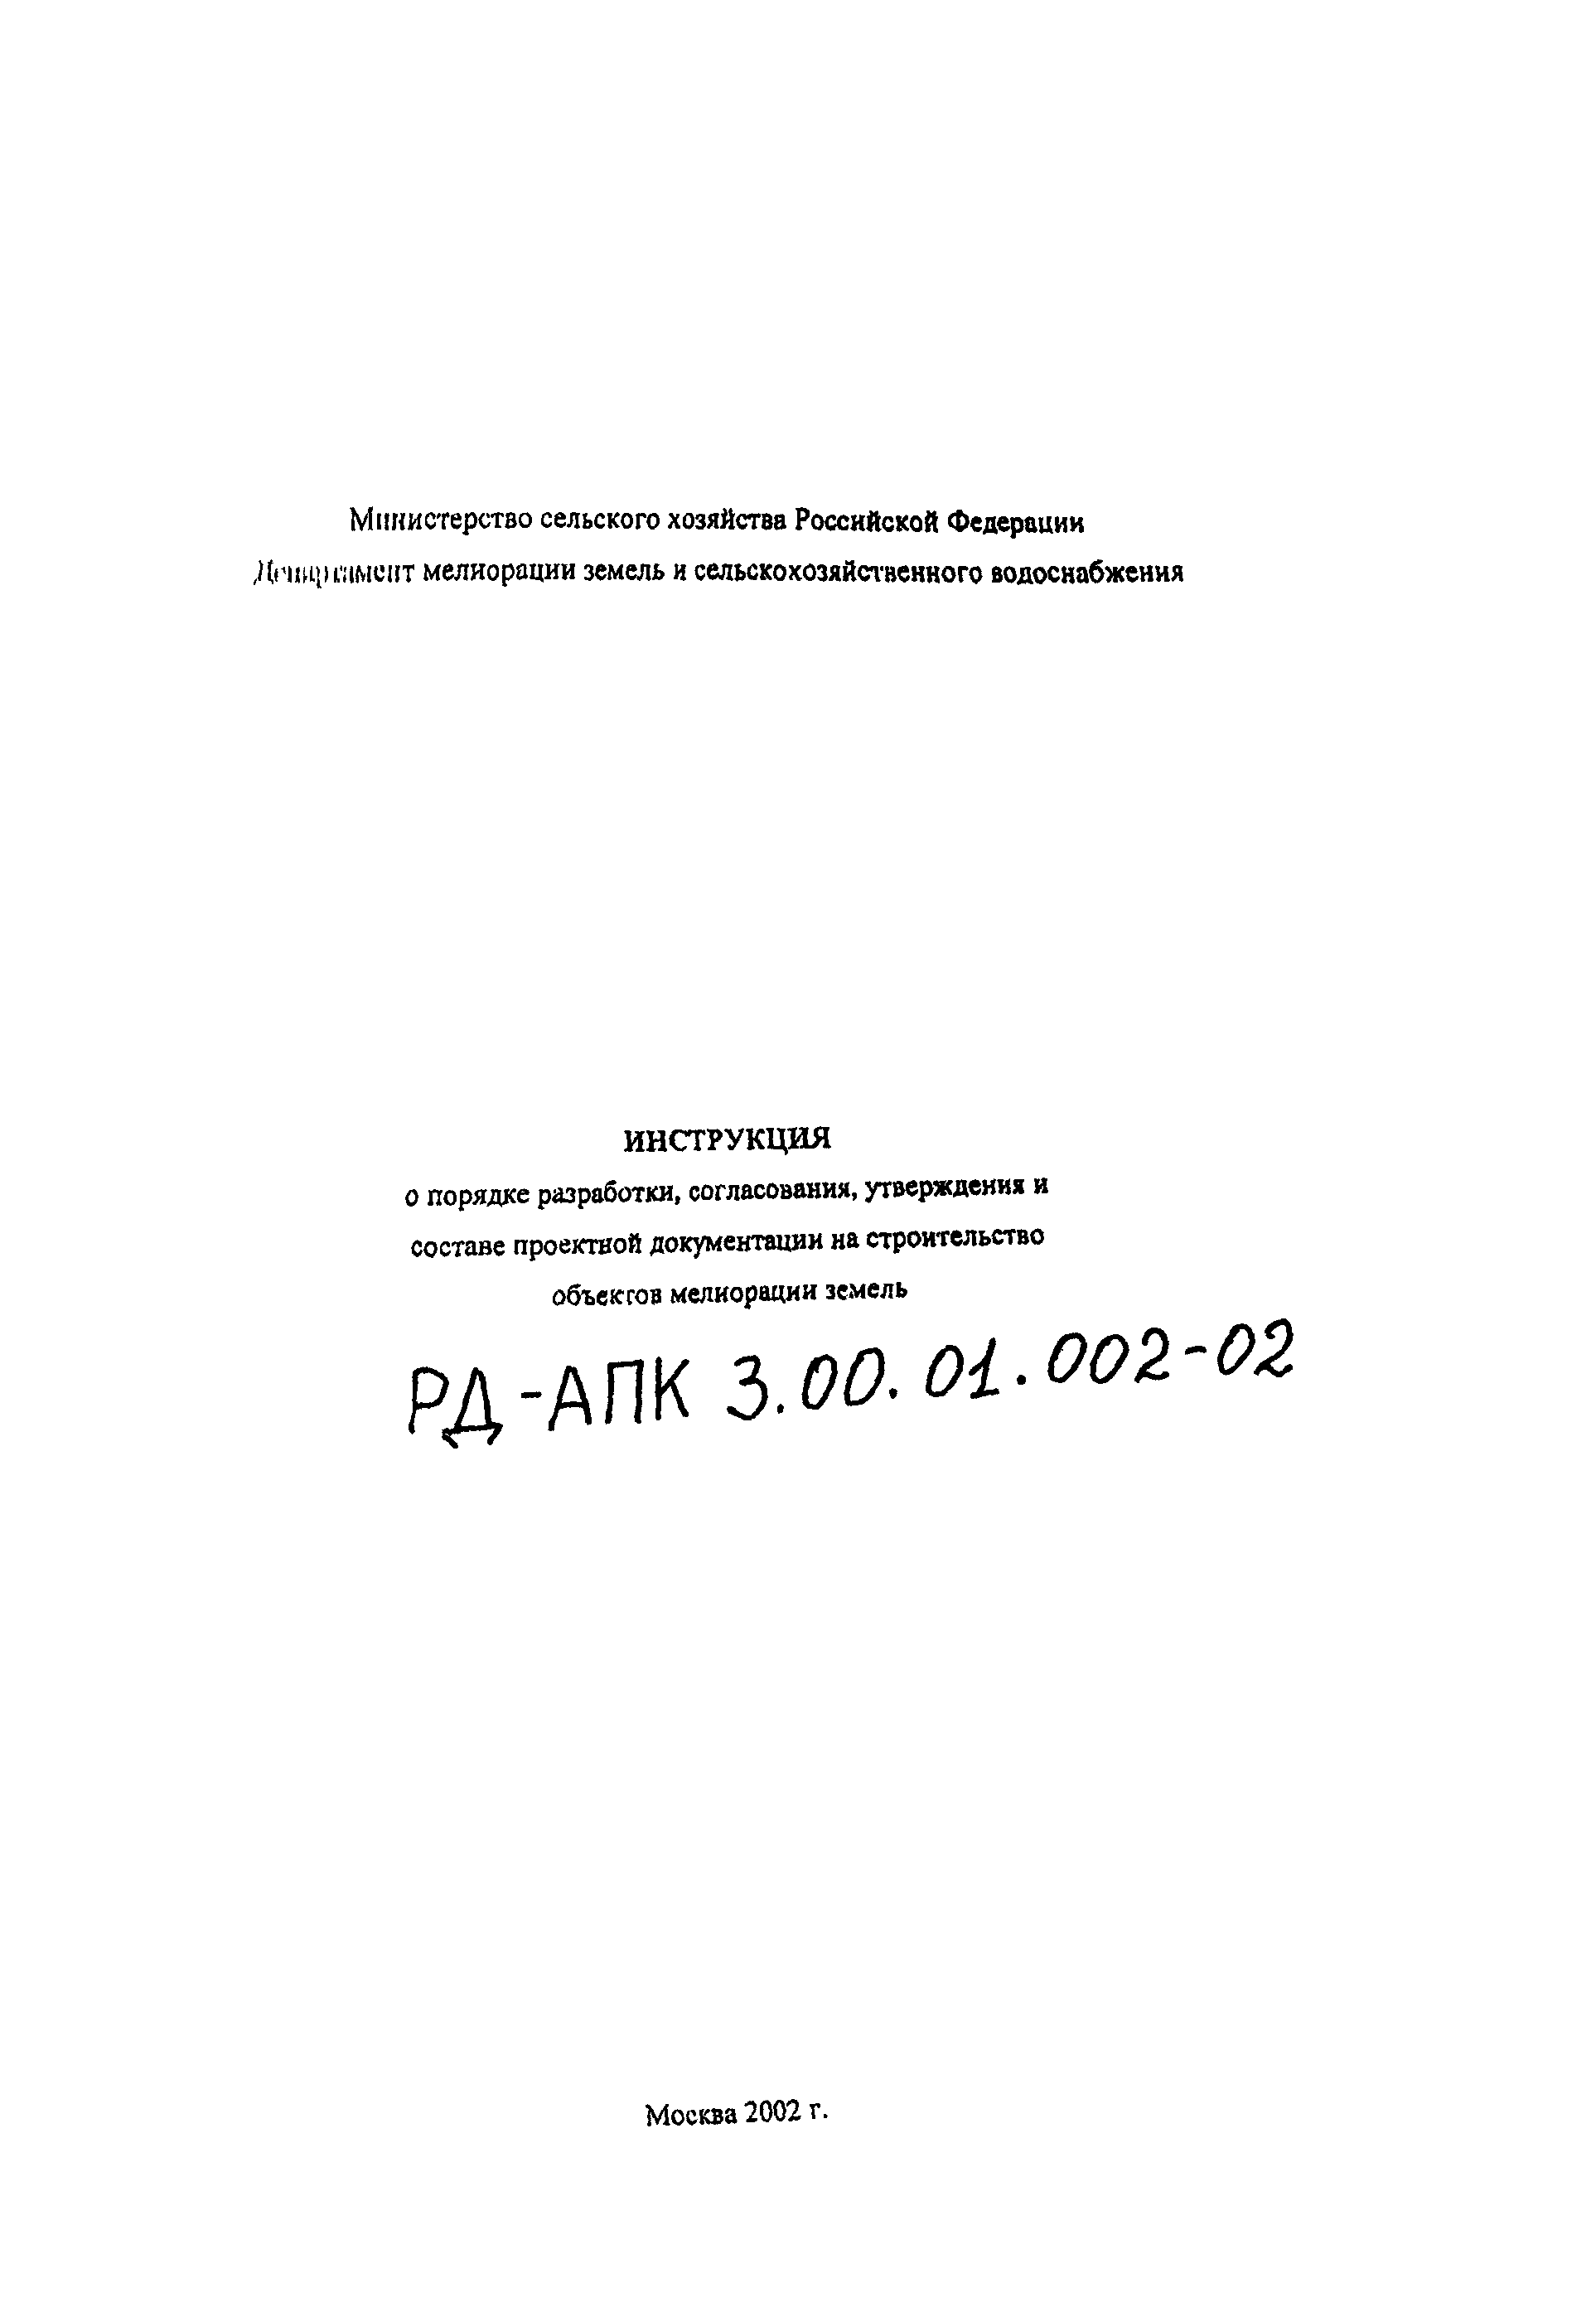 РД-АПК 3.00.01.002-02